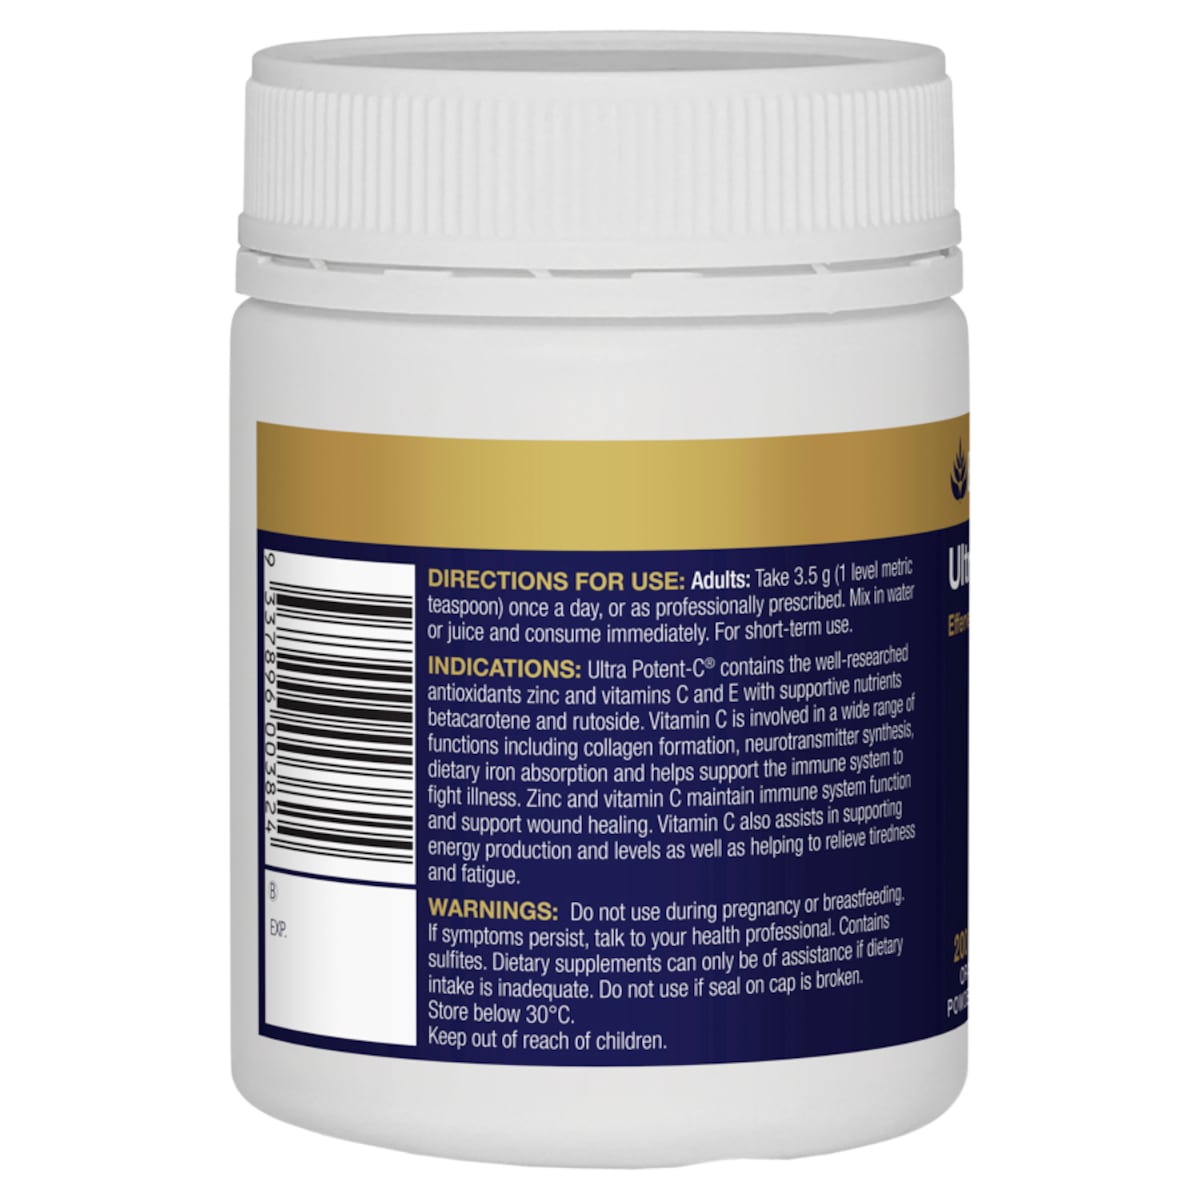 Bioceuticals Ultra Potent-C Powder Orange Flavour 200g